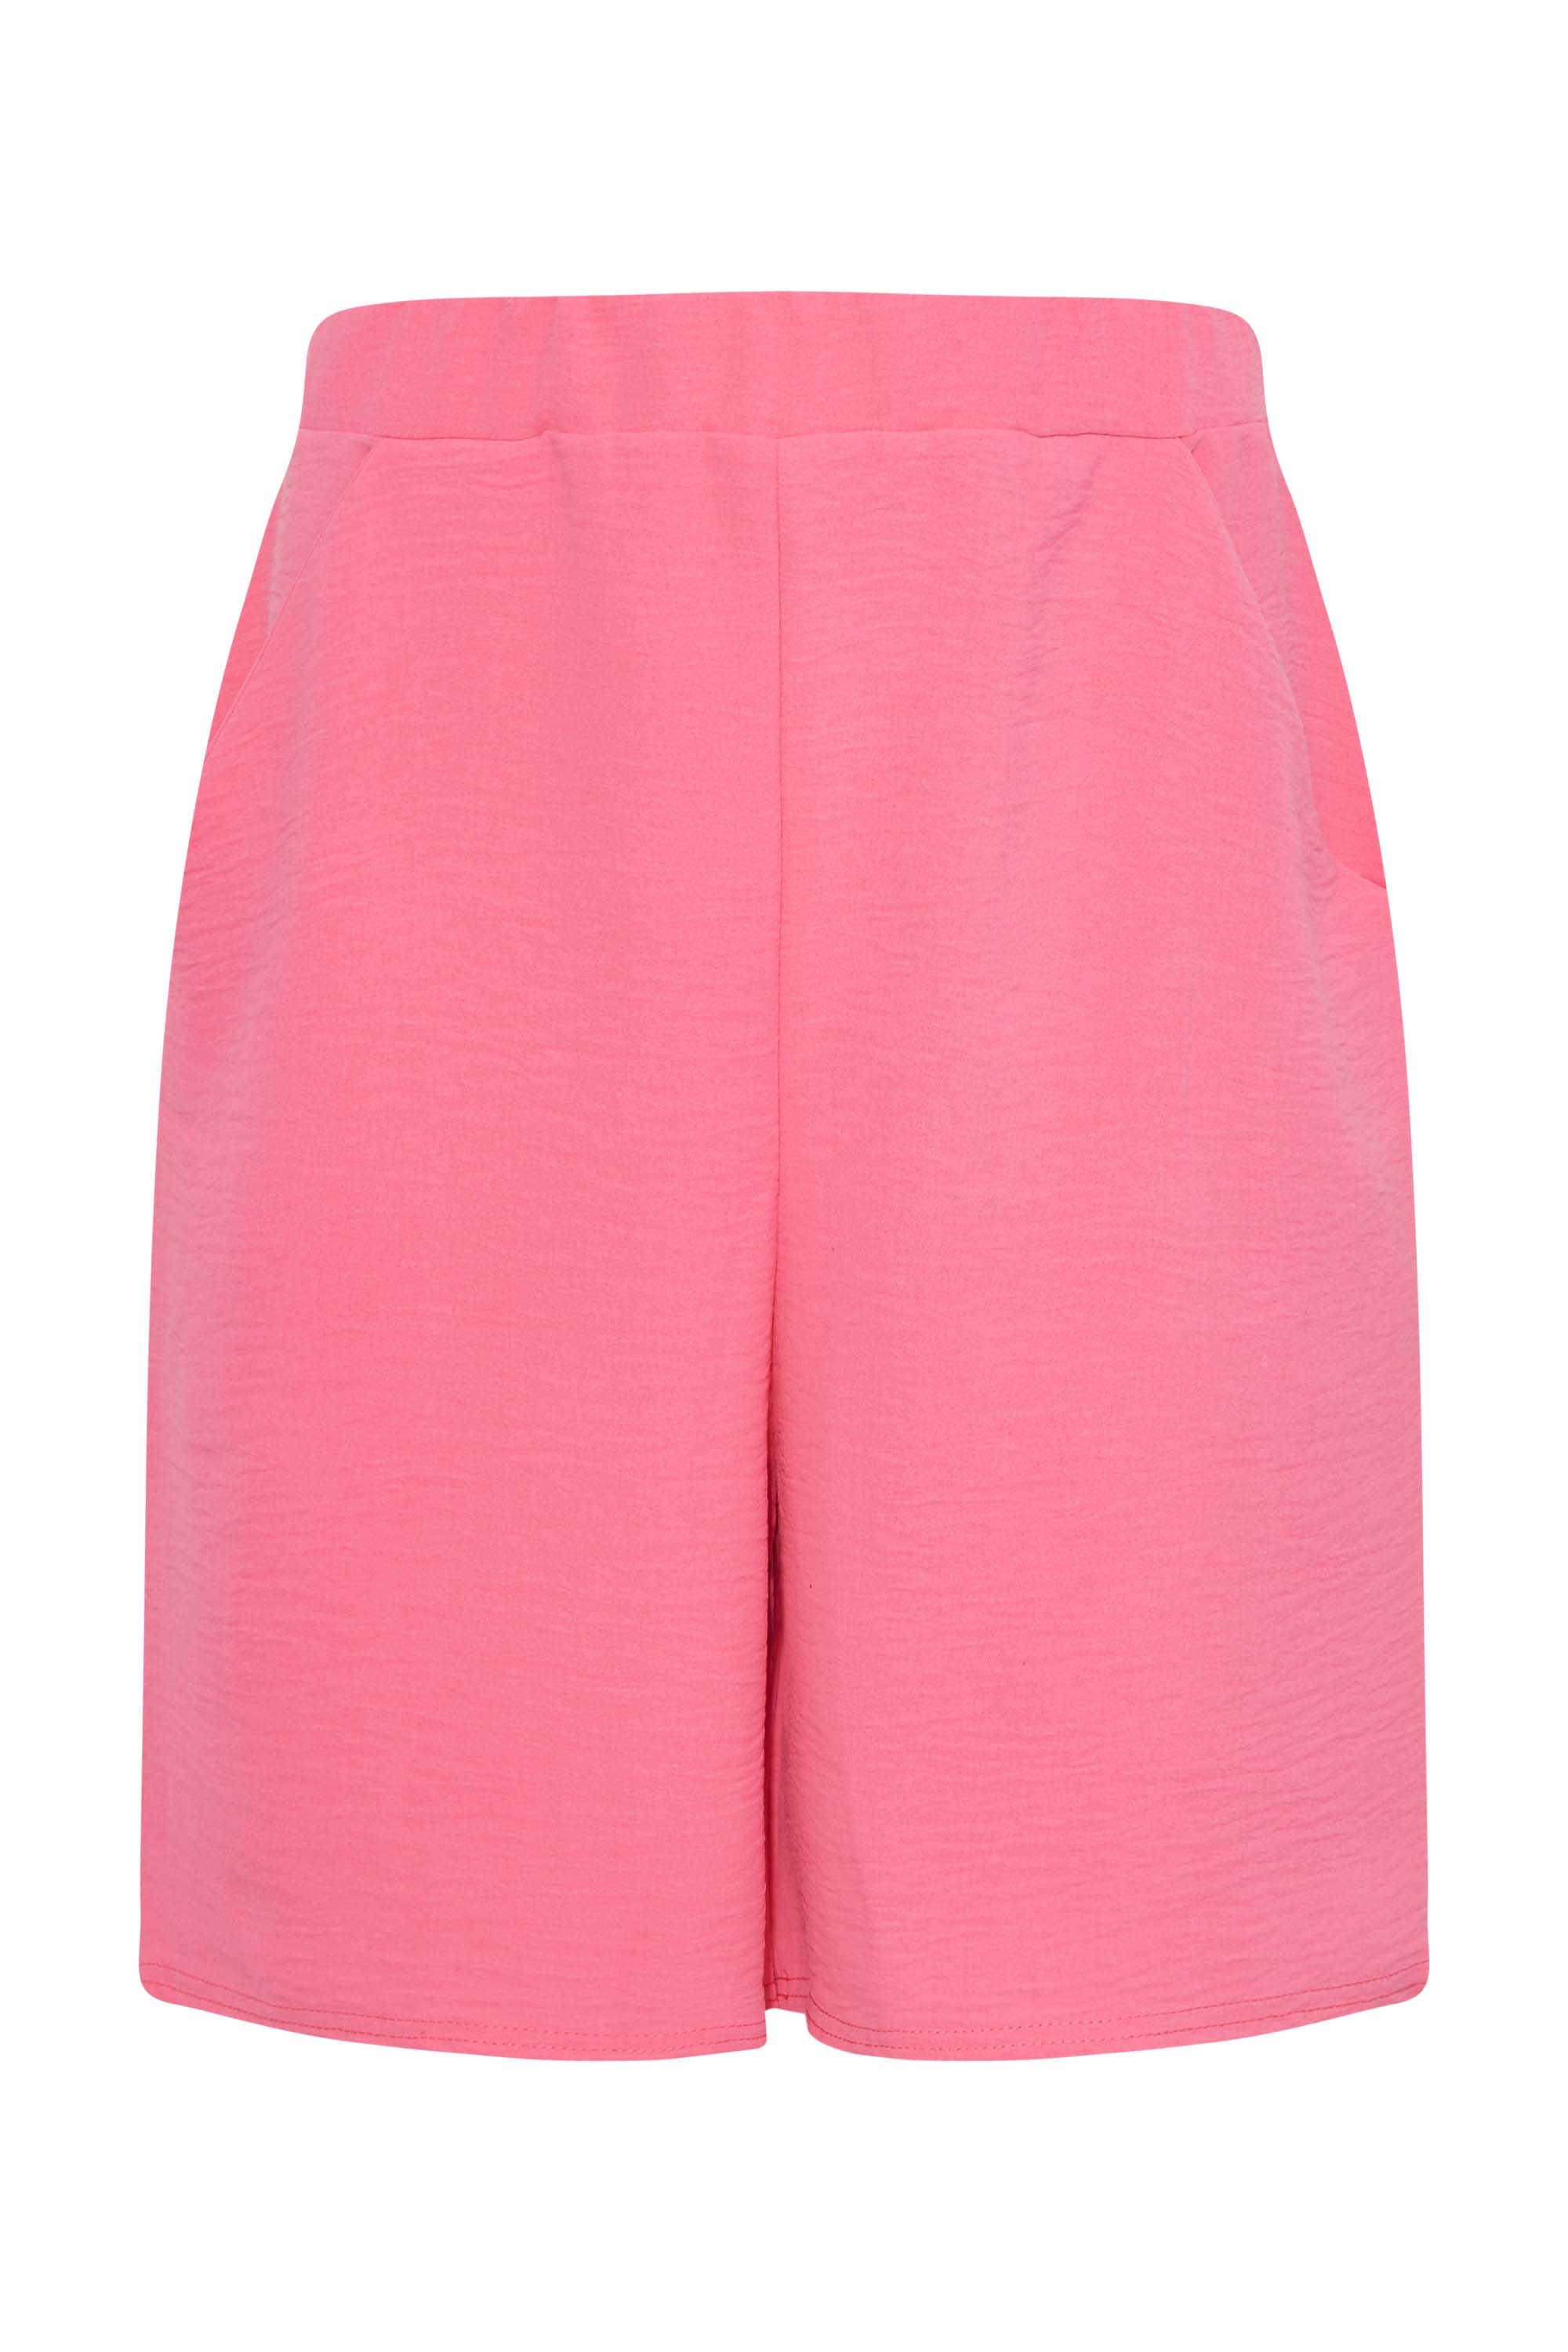 LTS Tall Pink Textured Shorts_X.jpg